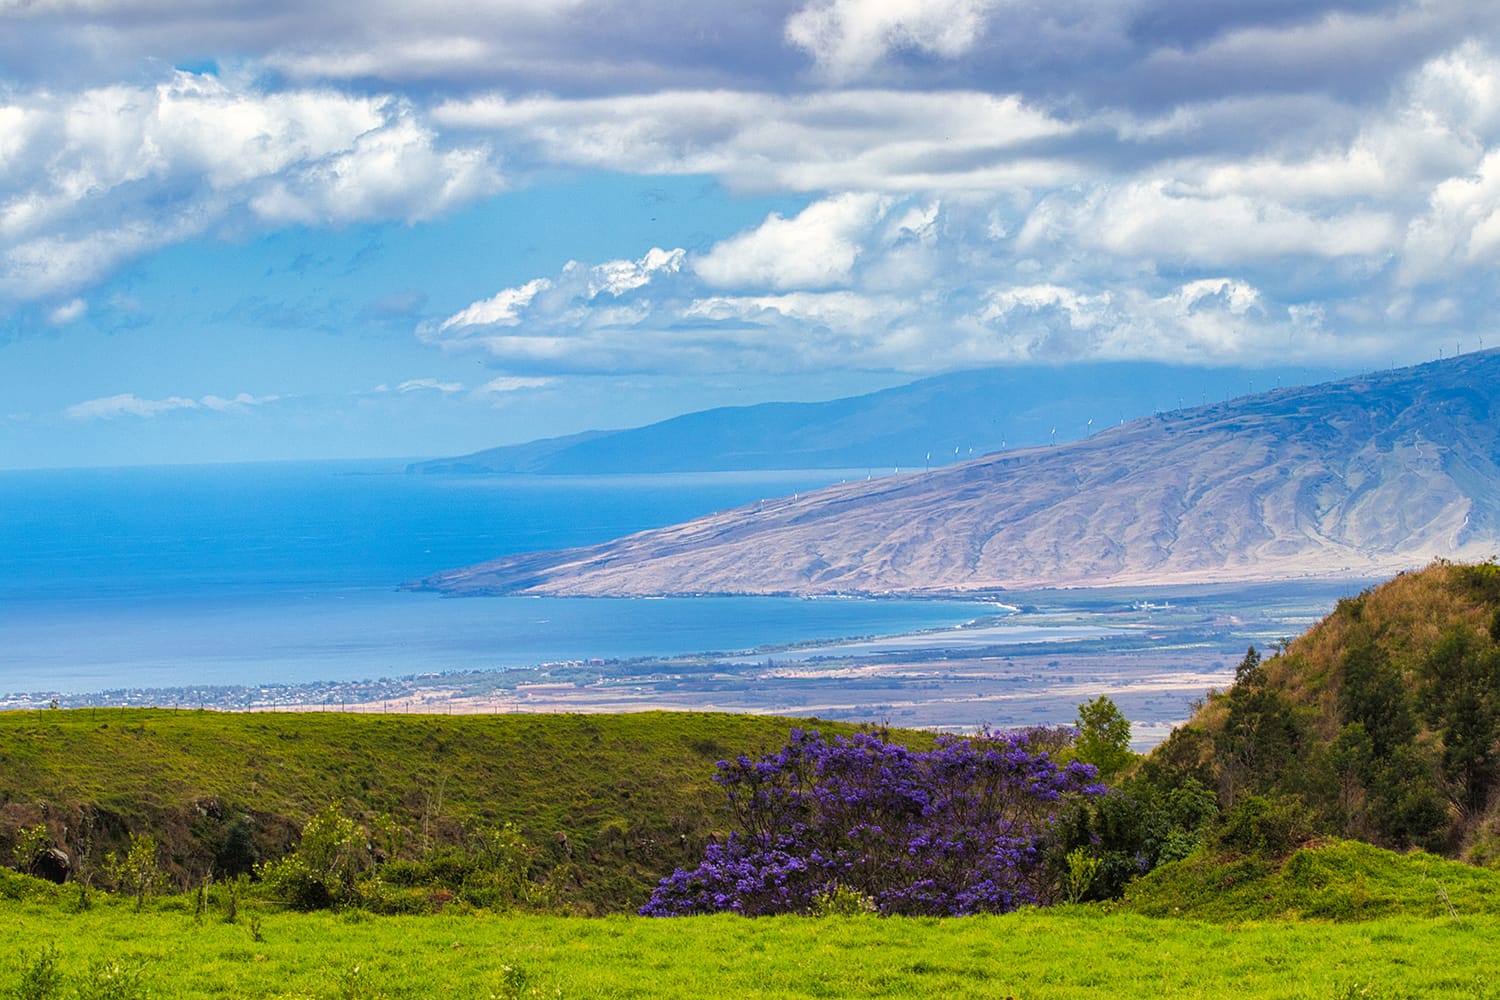 View of the West Maui coastline